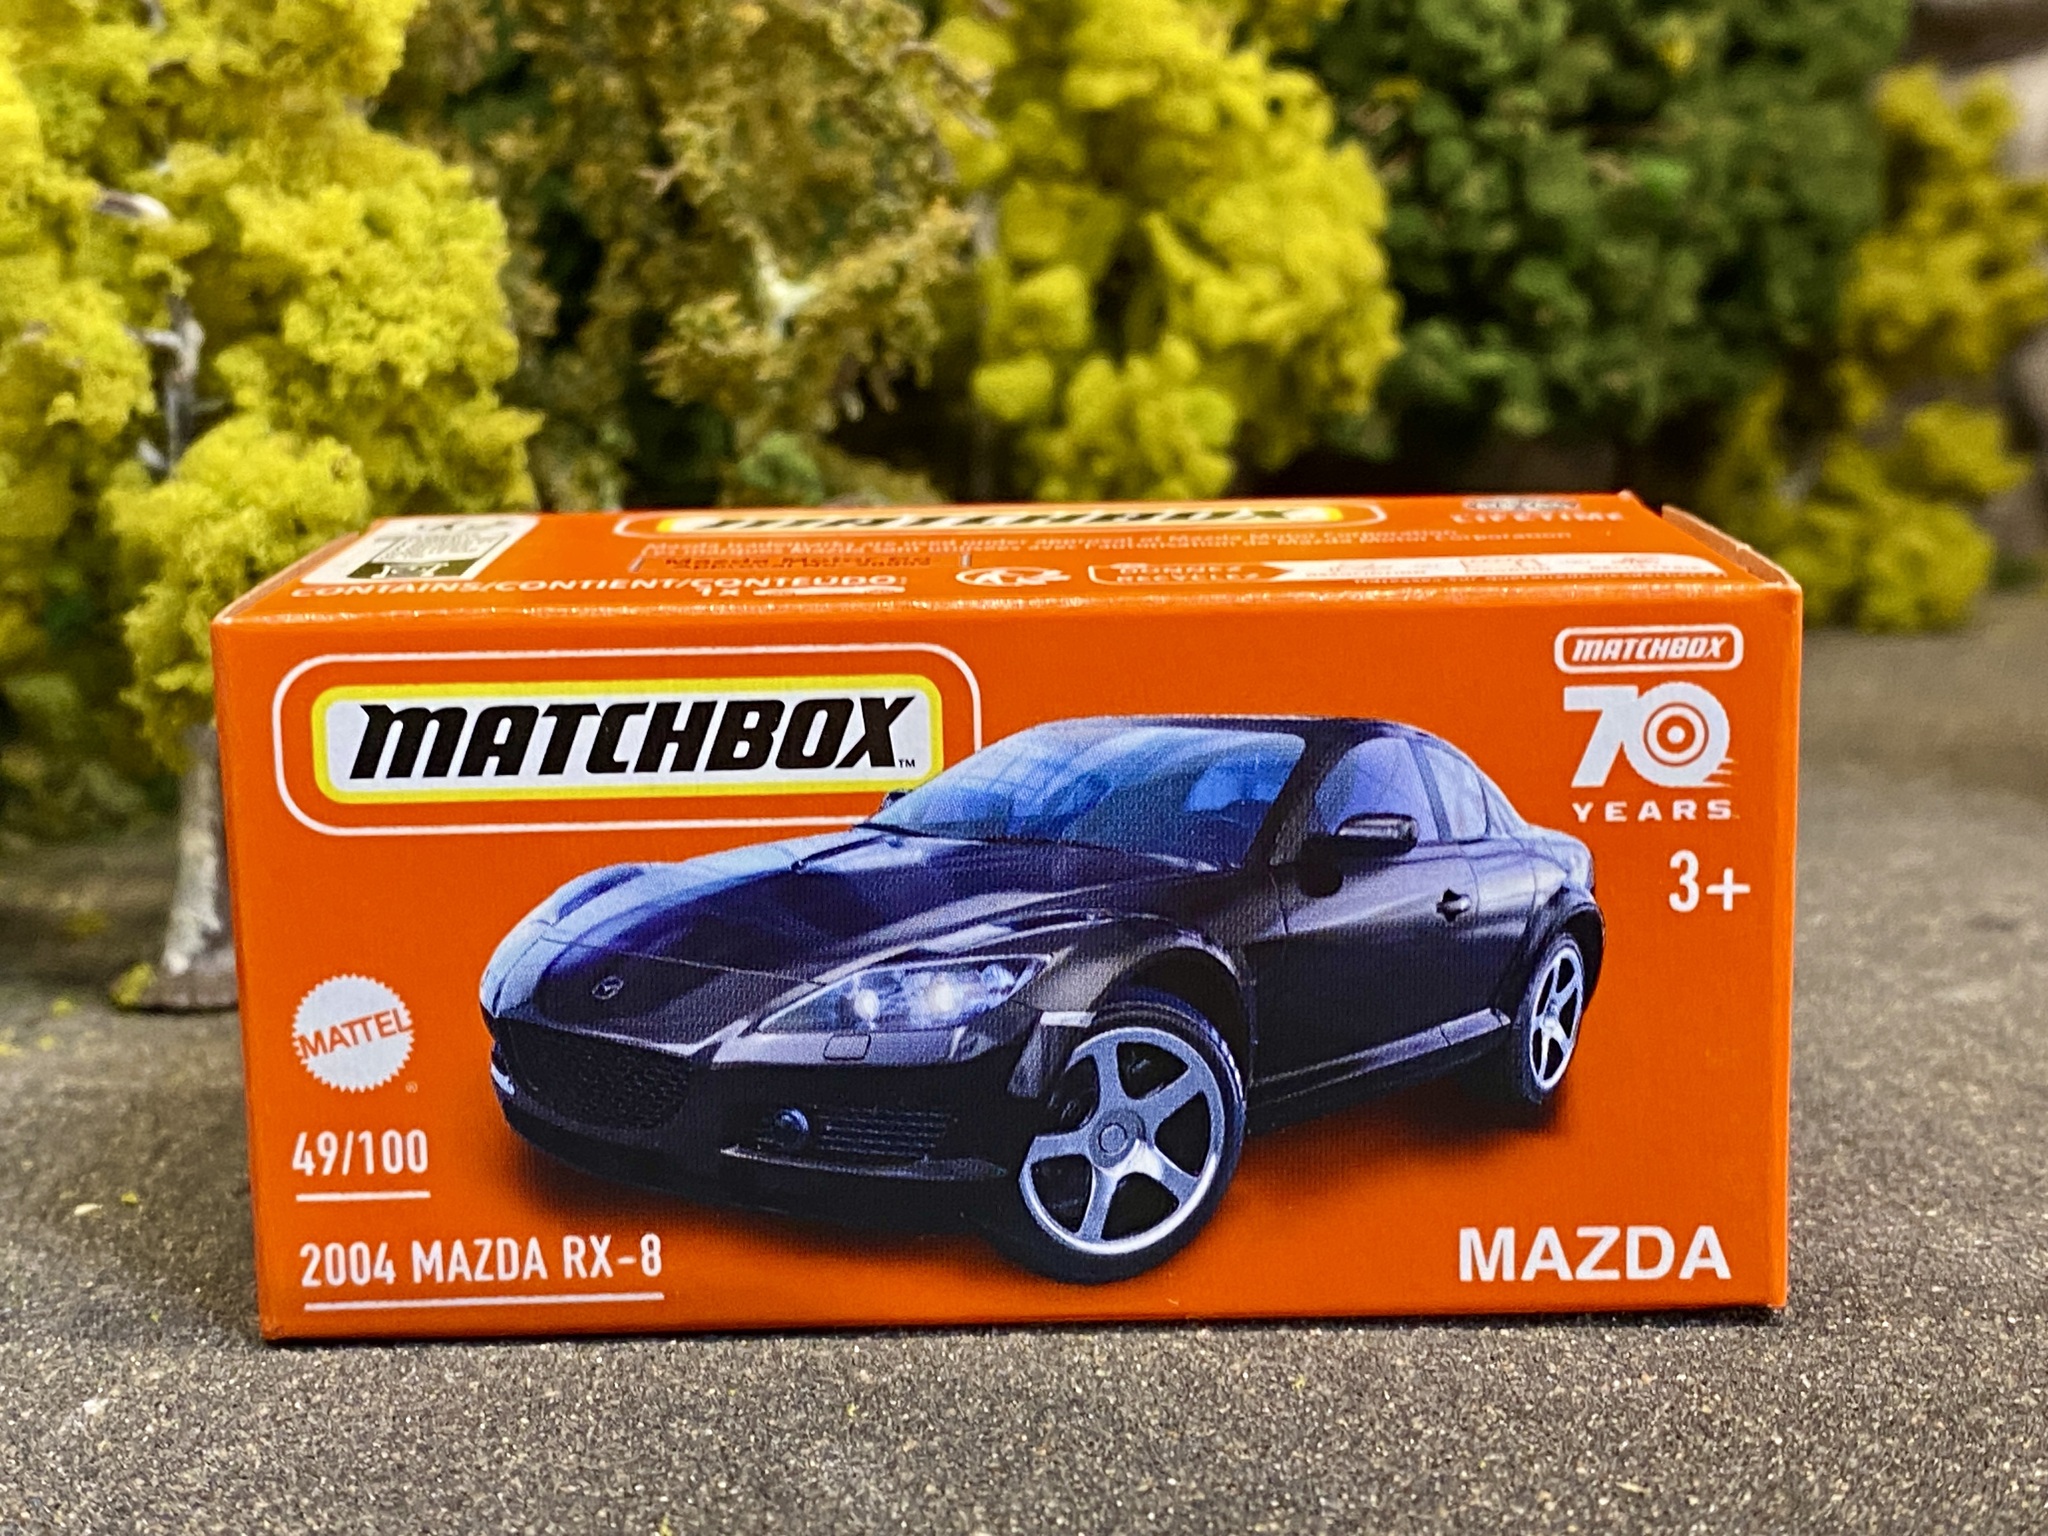 Skala 1/64 Matchbox 70 years - 2004 Mazda RX-8, Black